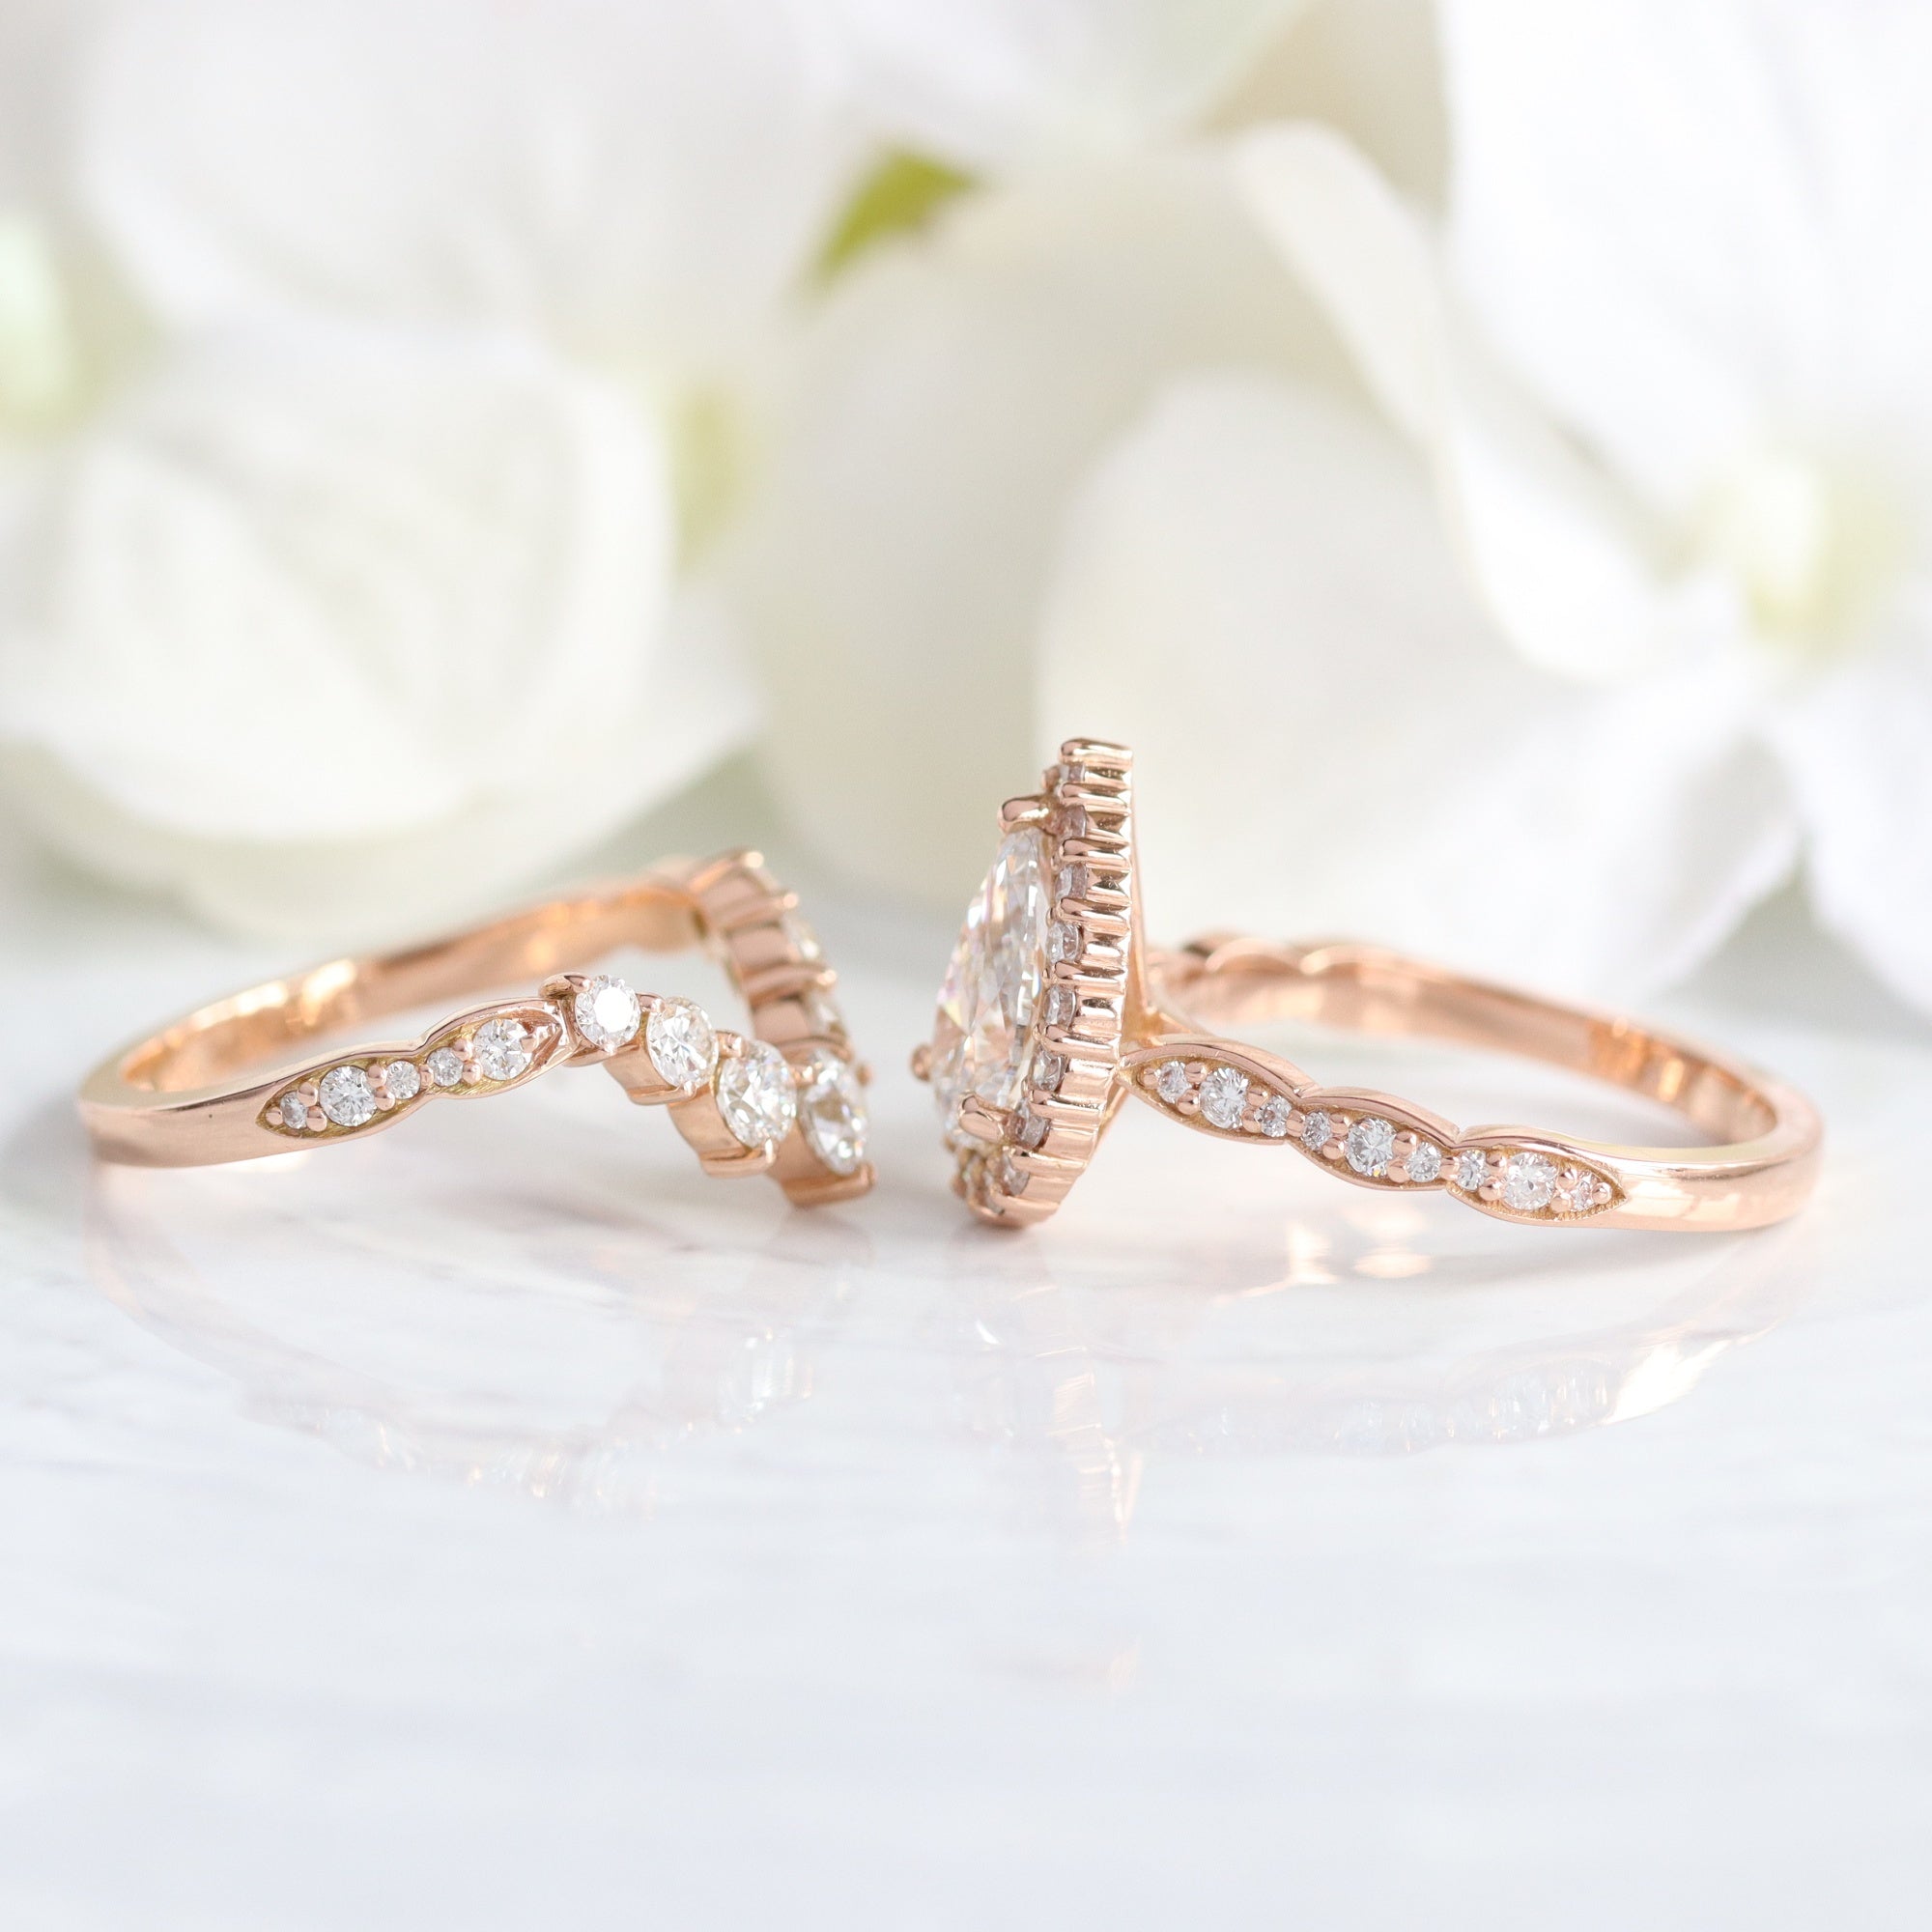 lab diamond ring stack rose gold halo pear diamond engagement ring set La More Design Jewelry